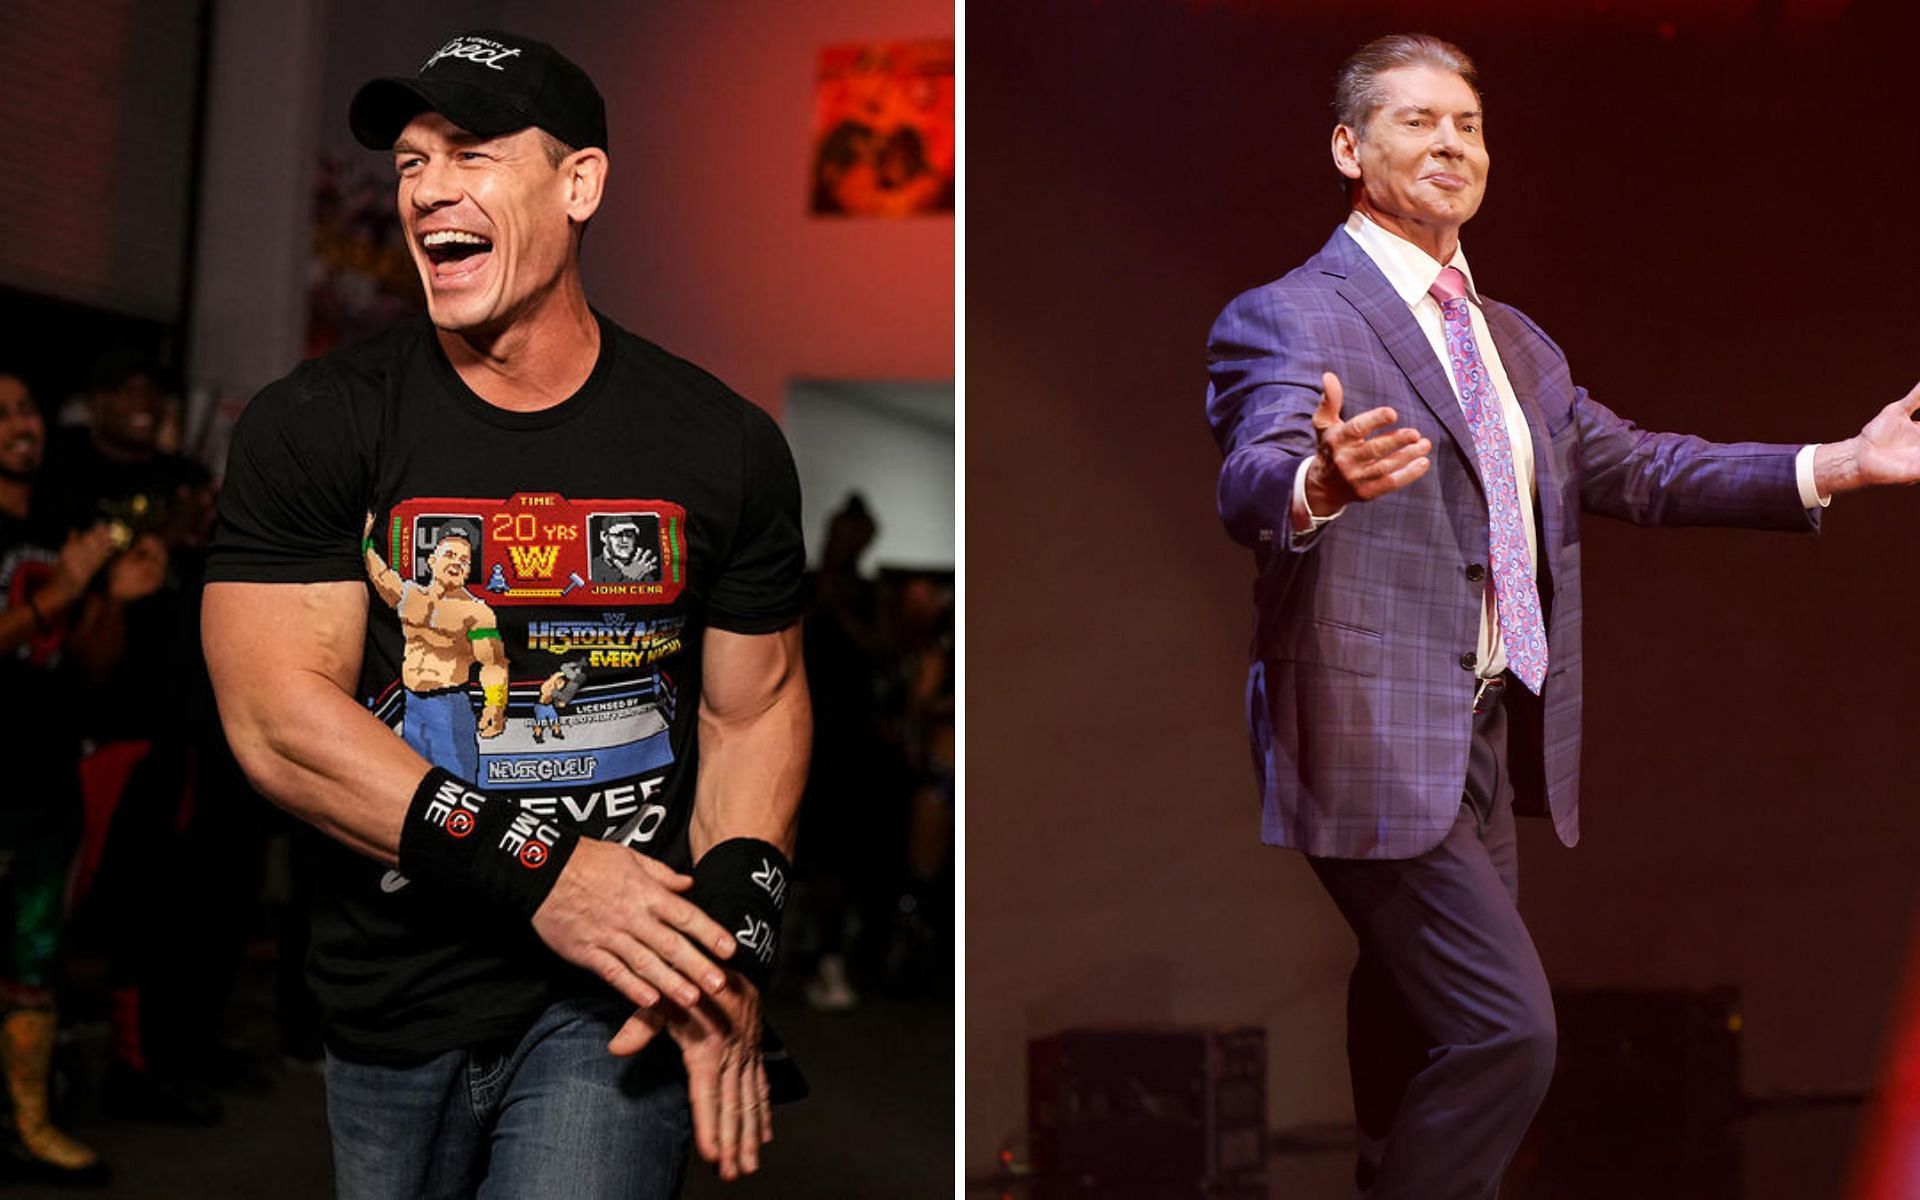 16-time world champion John Cena (left); Vince McMahon (right)